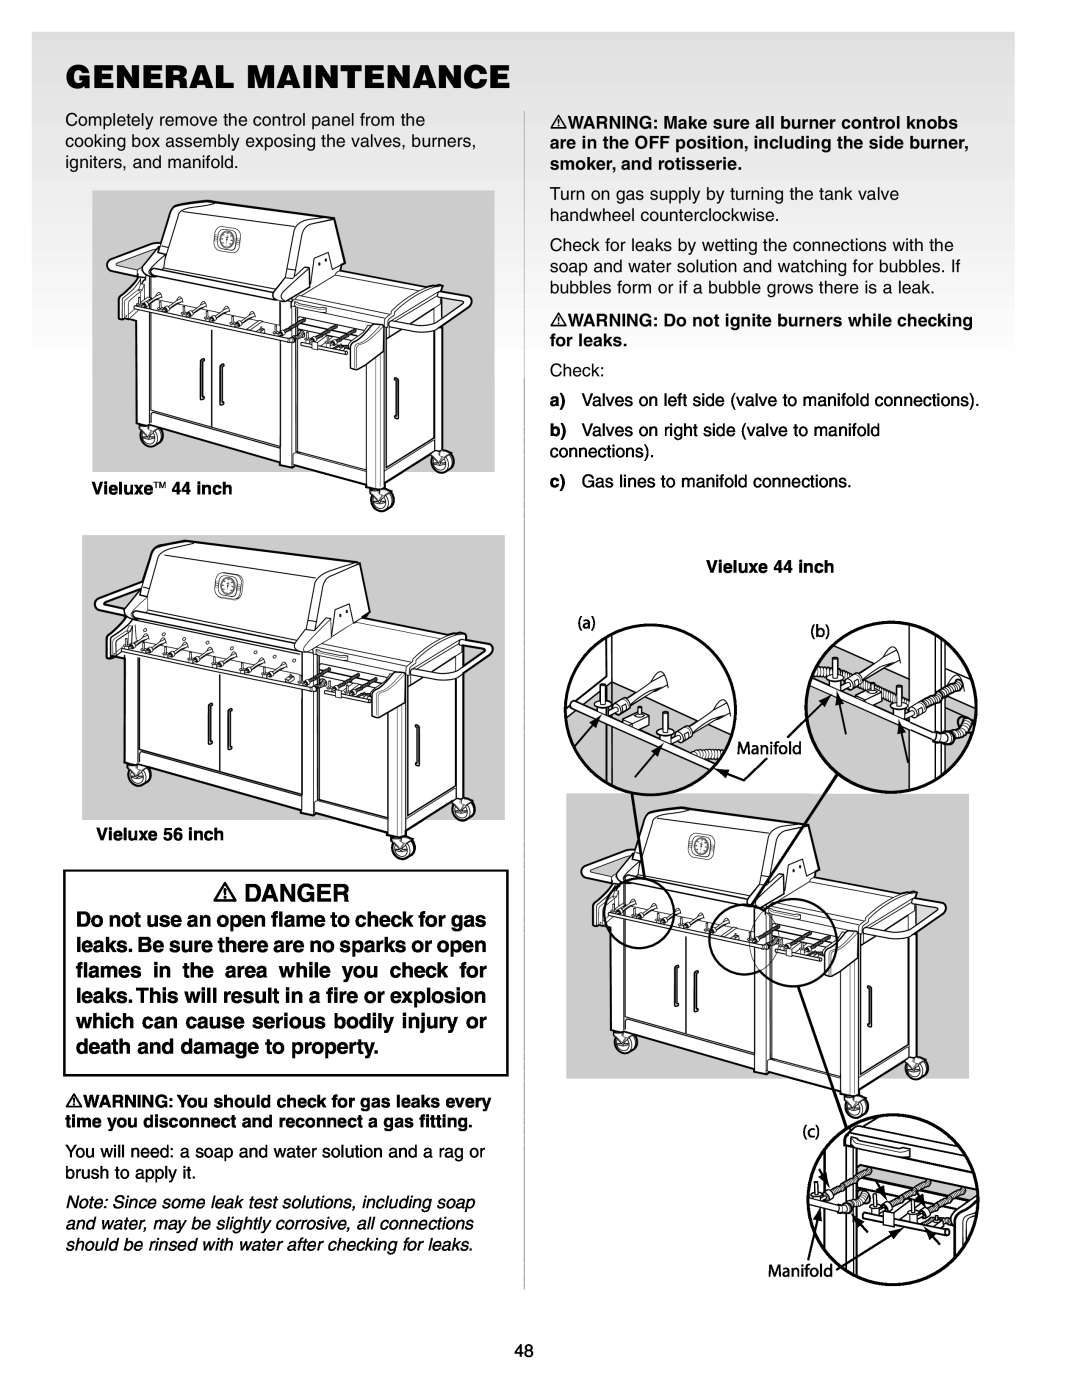 Weber Gas Burner manual General Maintenance, Danger, VieluxeTM 44 inch Vieluxe 56 inch 